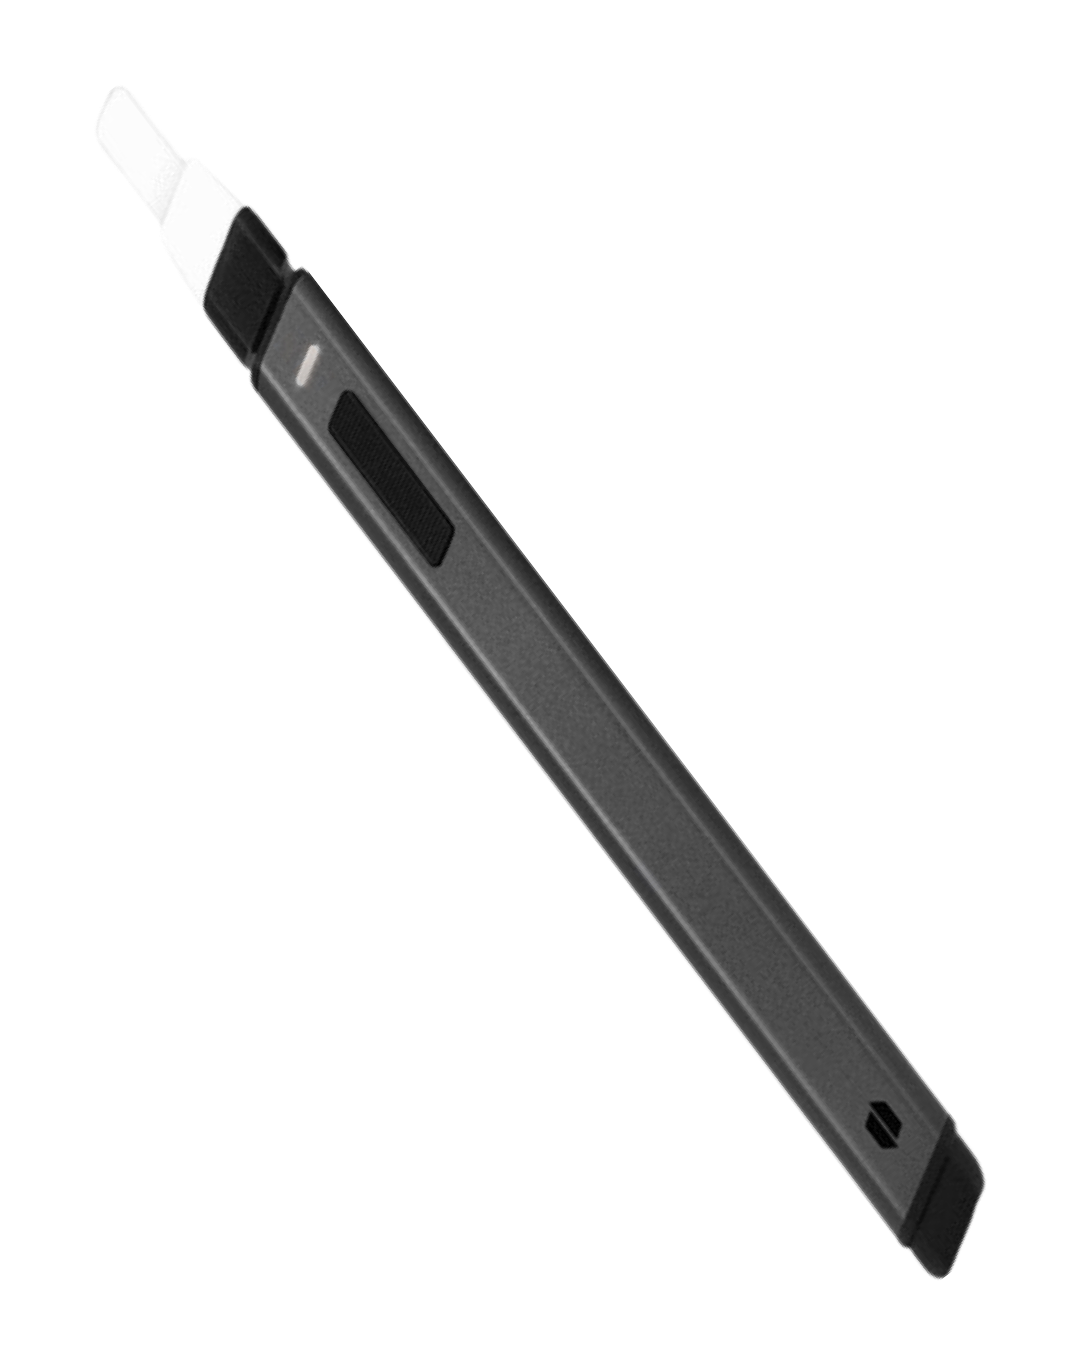 Hot Knife - Heated Loading Tool